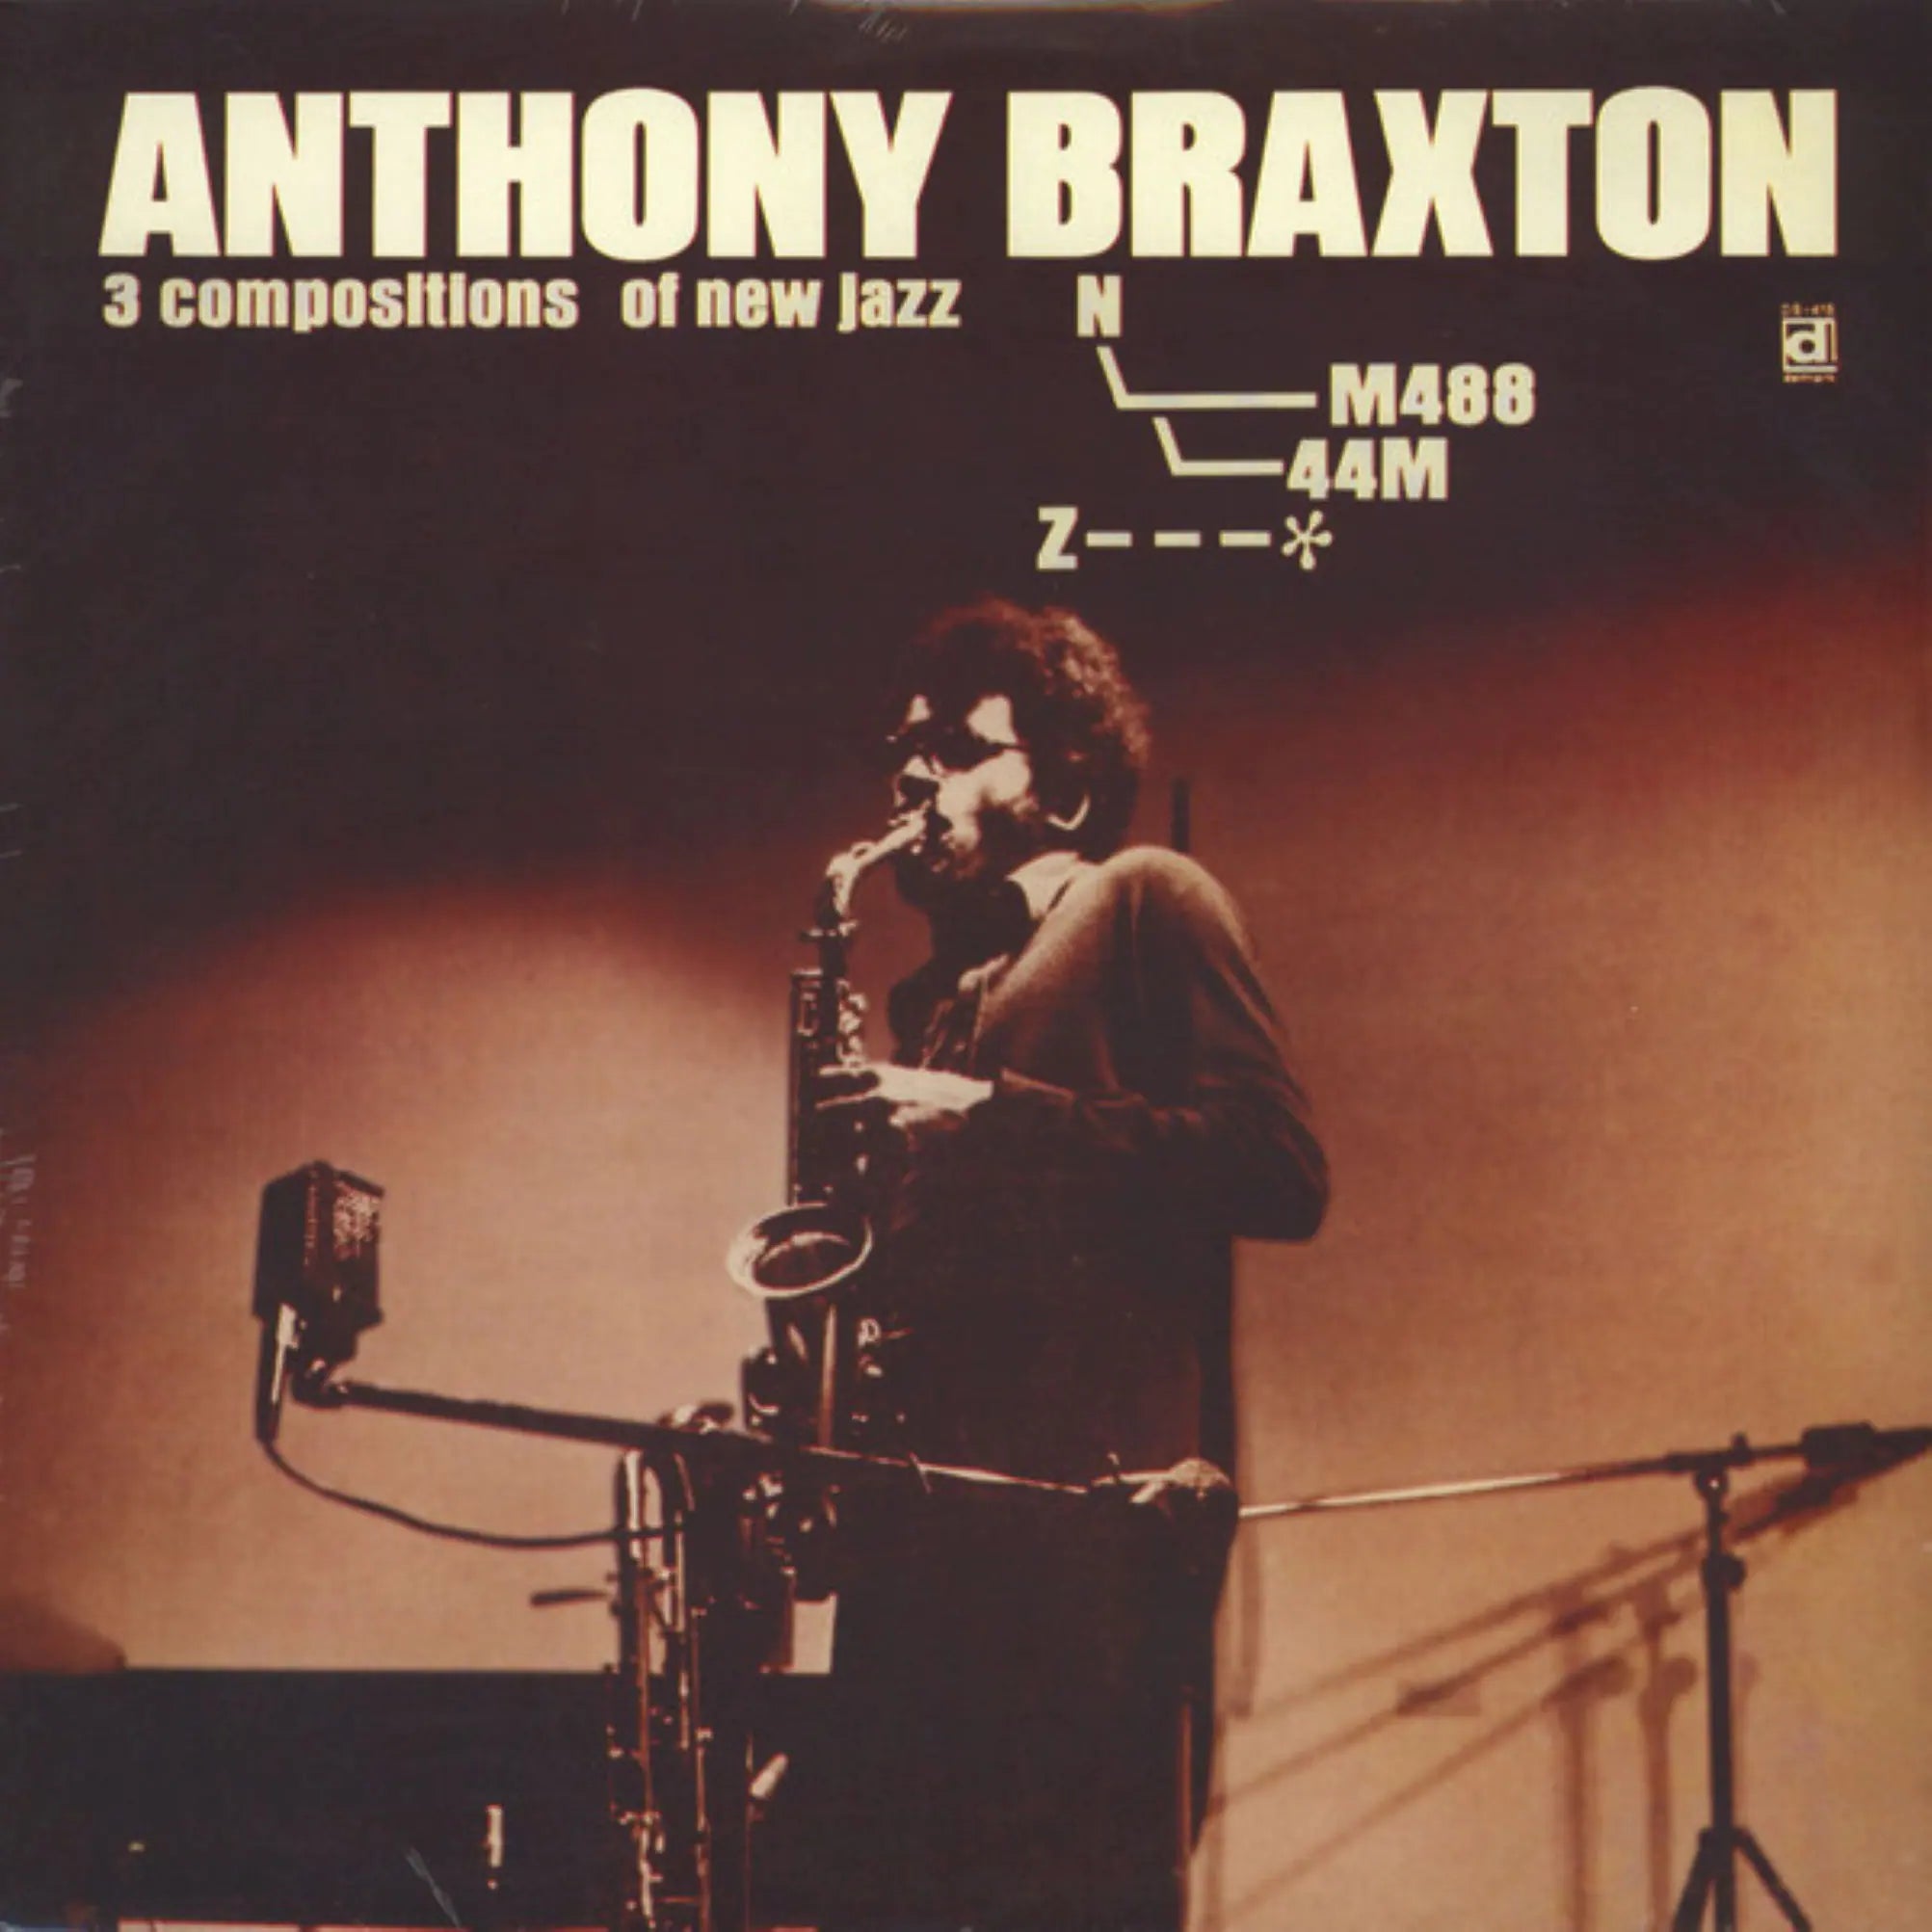 ANTHONY BRAXTON - 3 COMPOSITIONS OF NEW JAZZ Vinyl LP